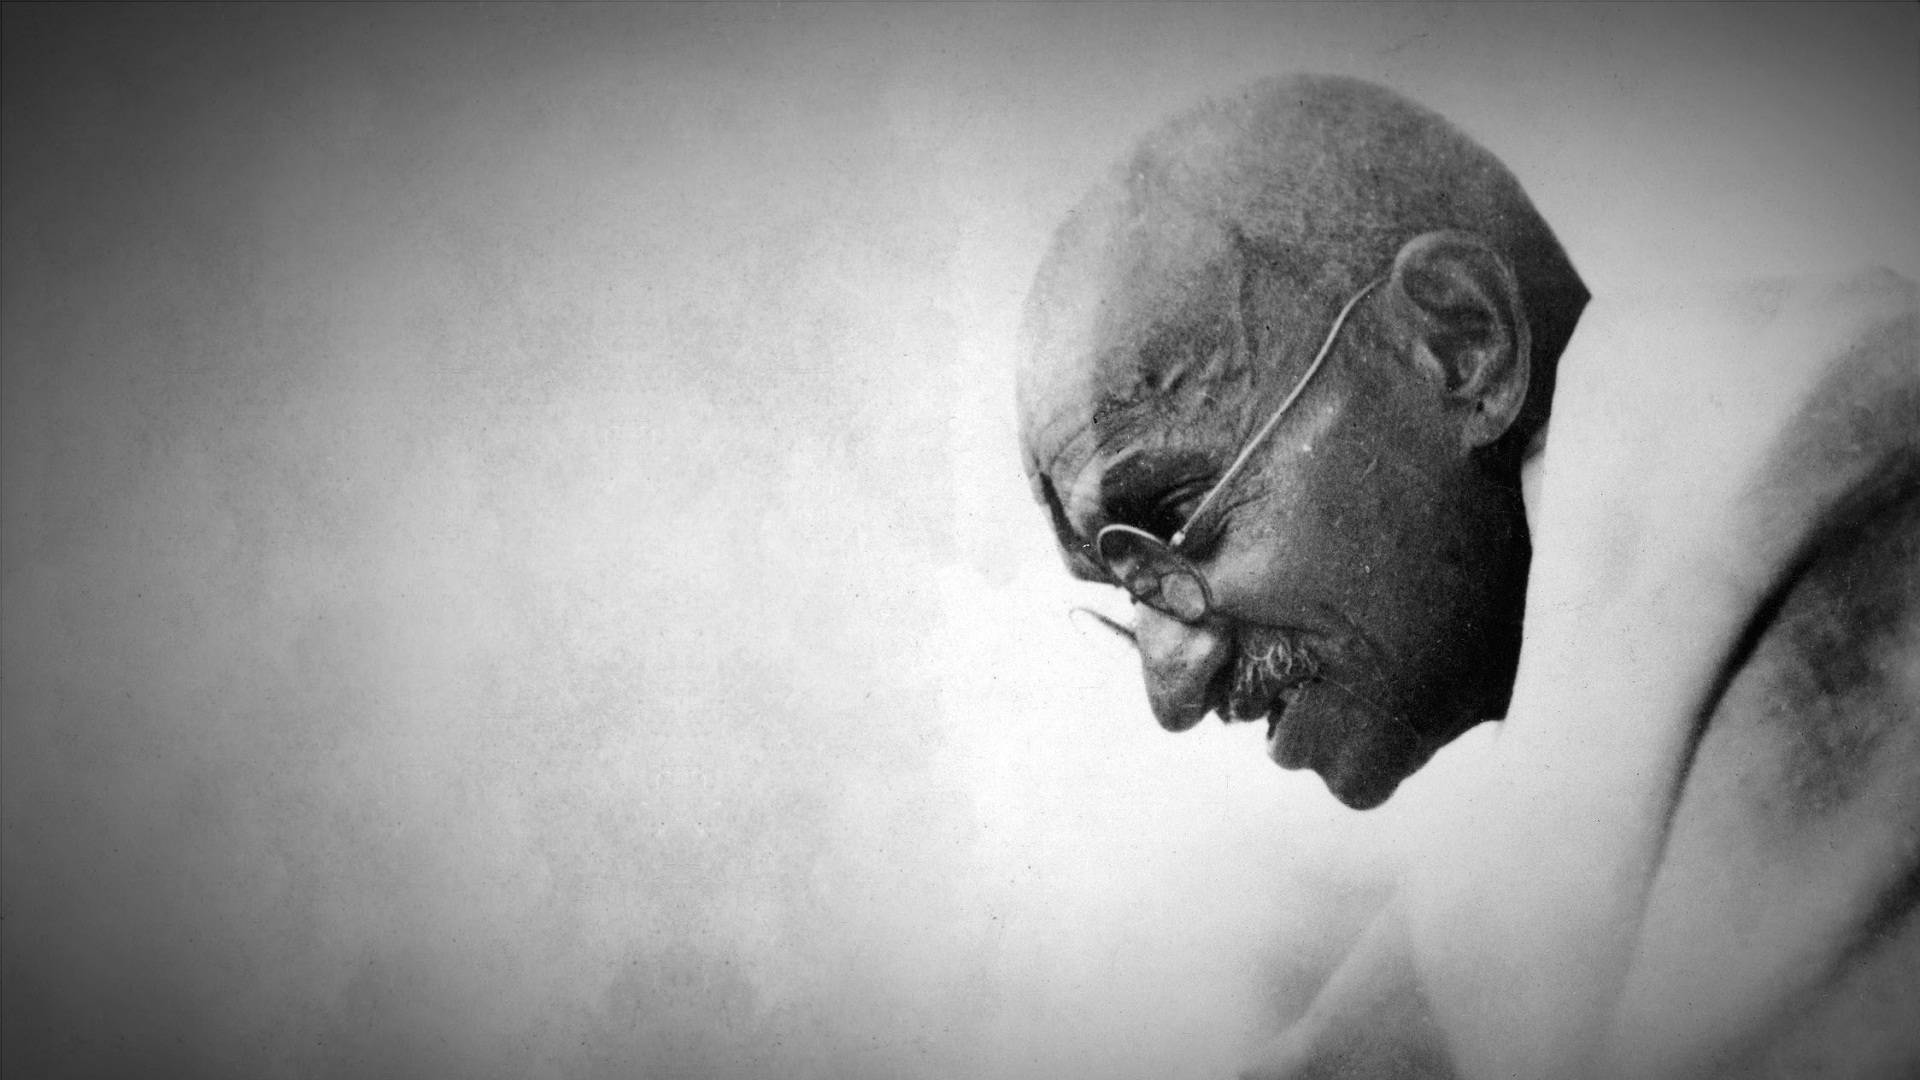 Free Mahatma Gandhi Wallpaper Downloads, [100+] Mahatma Gandhi Wallpapers  for FREE 